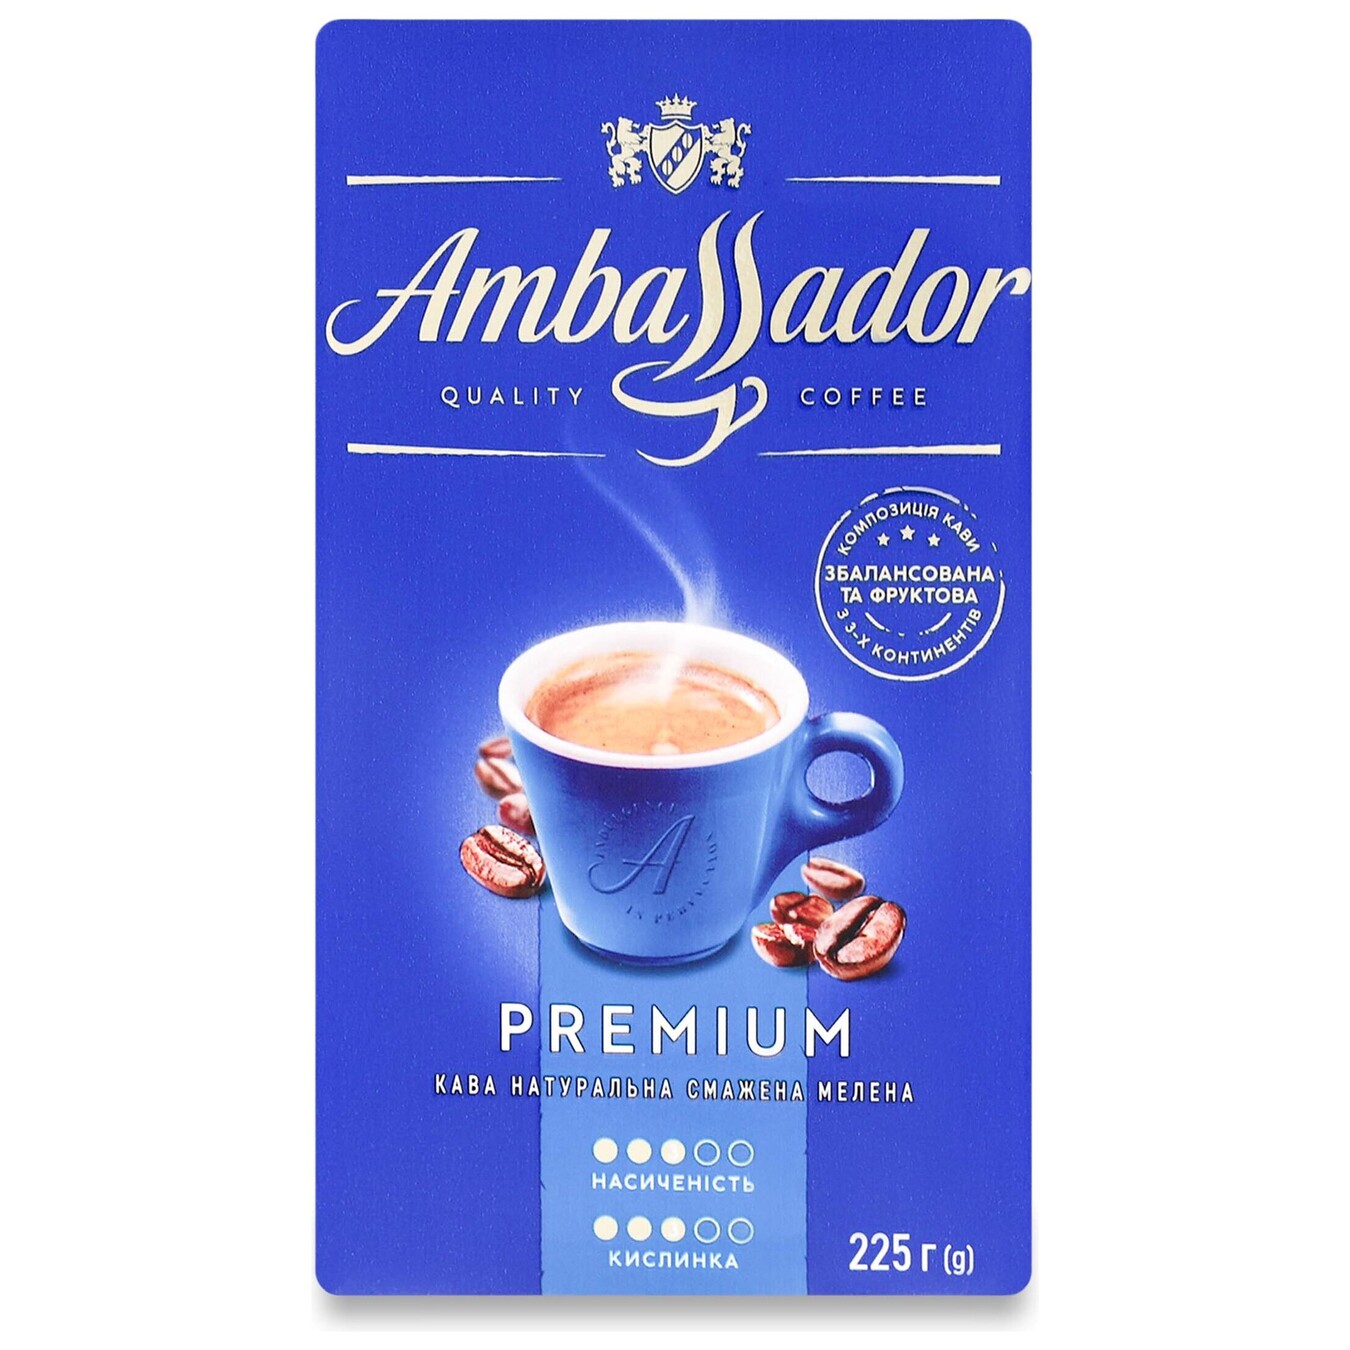 Ambassador Premium natural roasted ground coffee 225 g